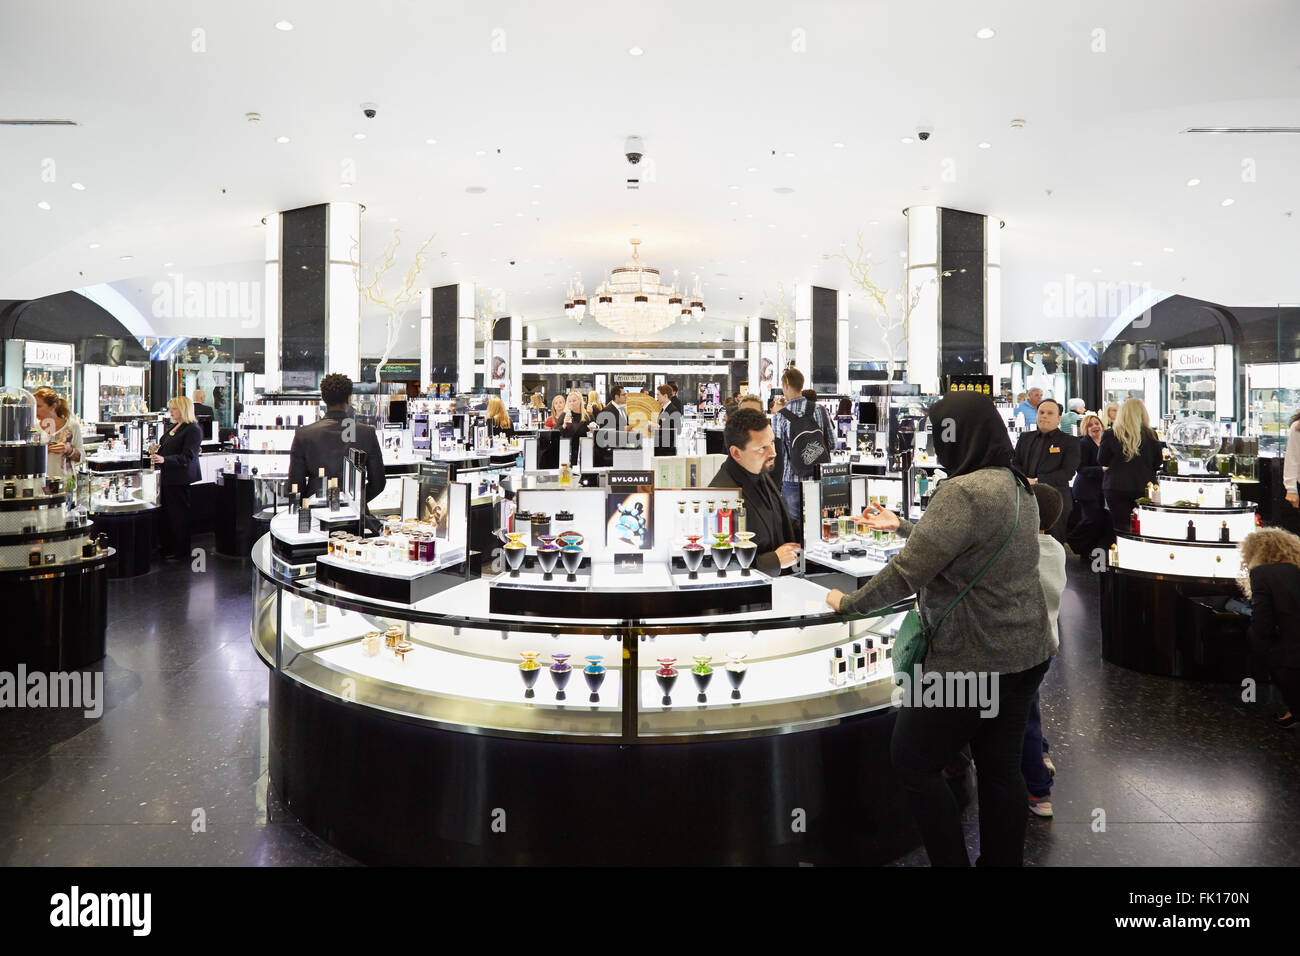 Harrods department store interior, perfumery area in London Stock Photo